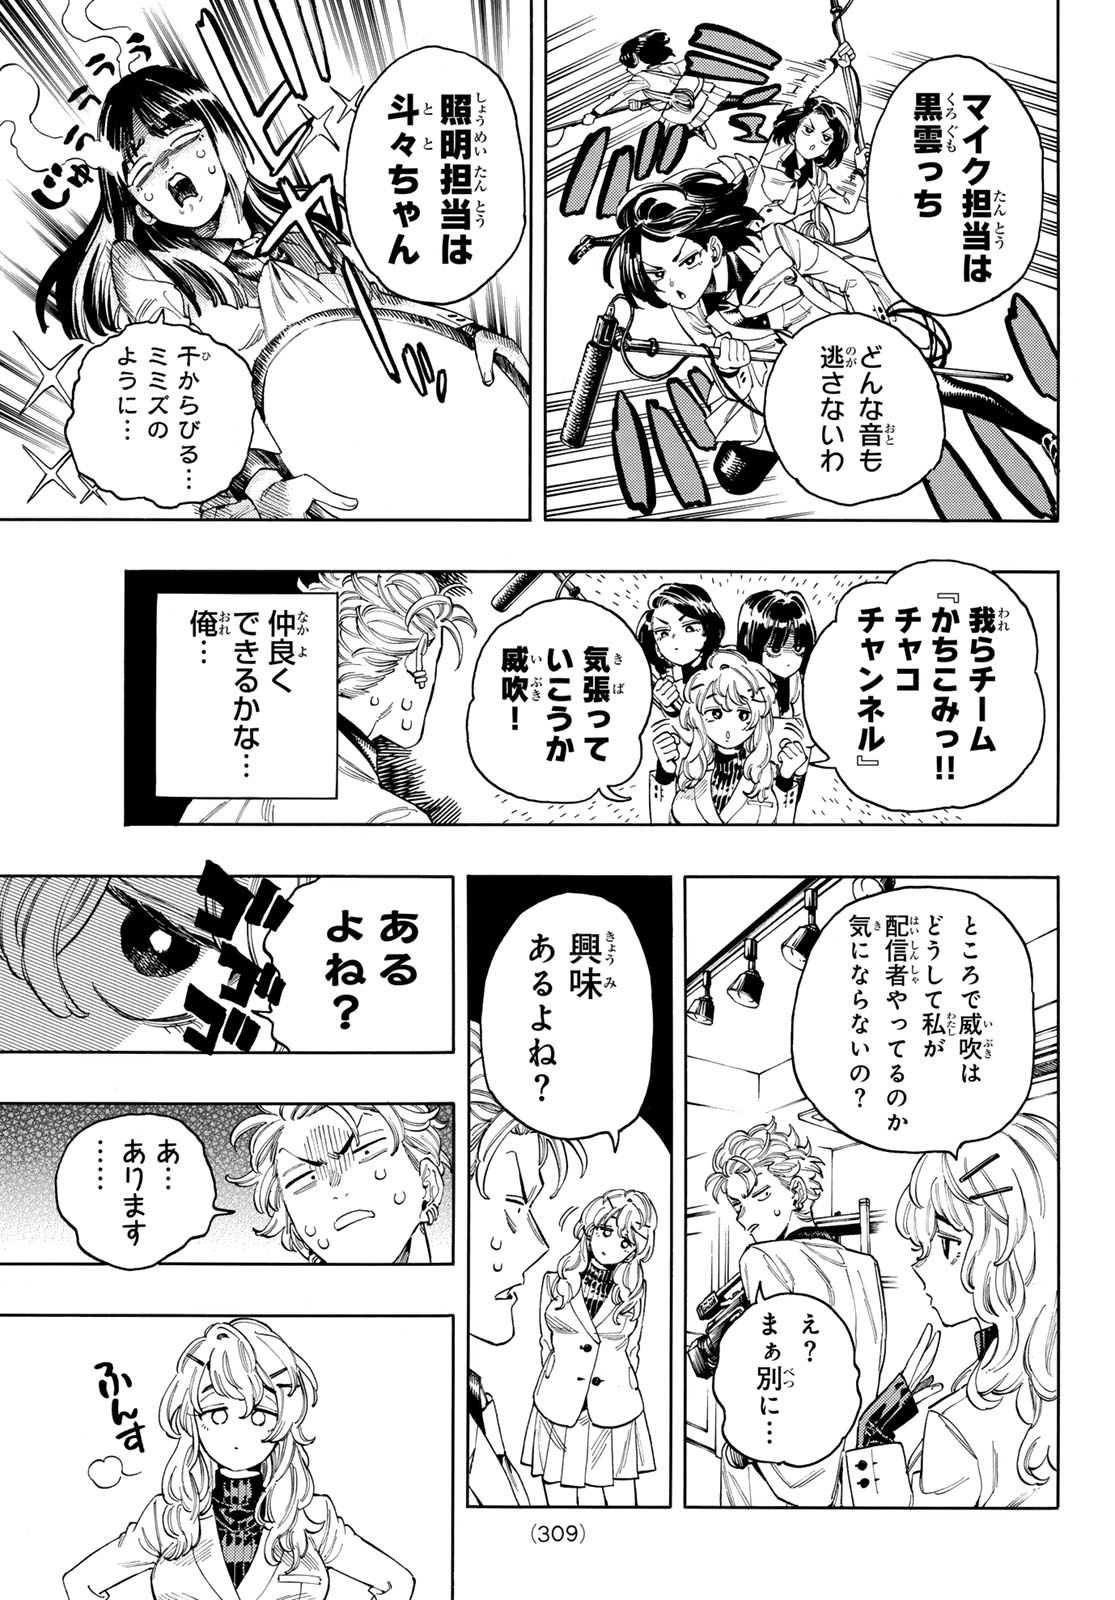 Akabane Honeko no Bodyguard - Chapter 82 - Page 13